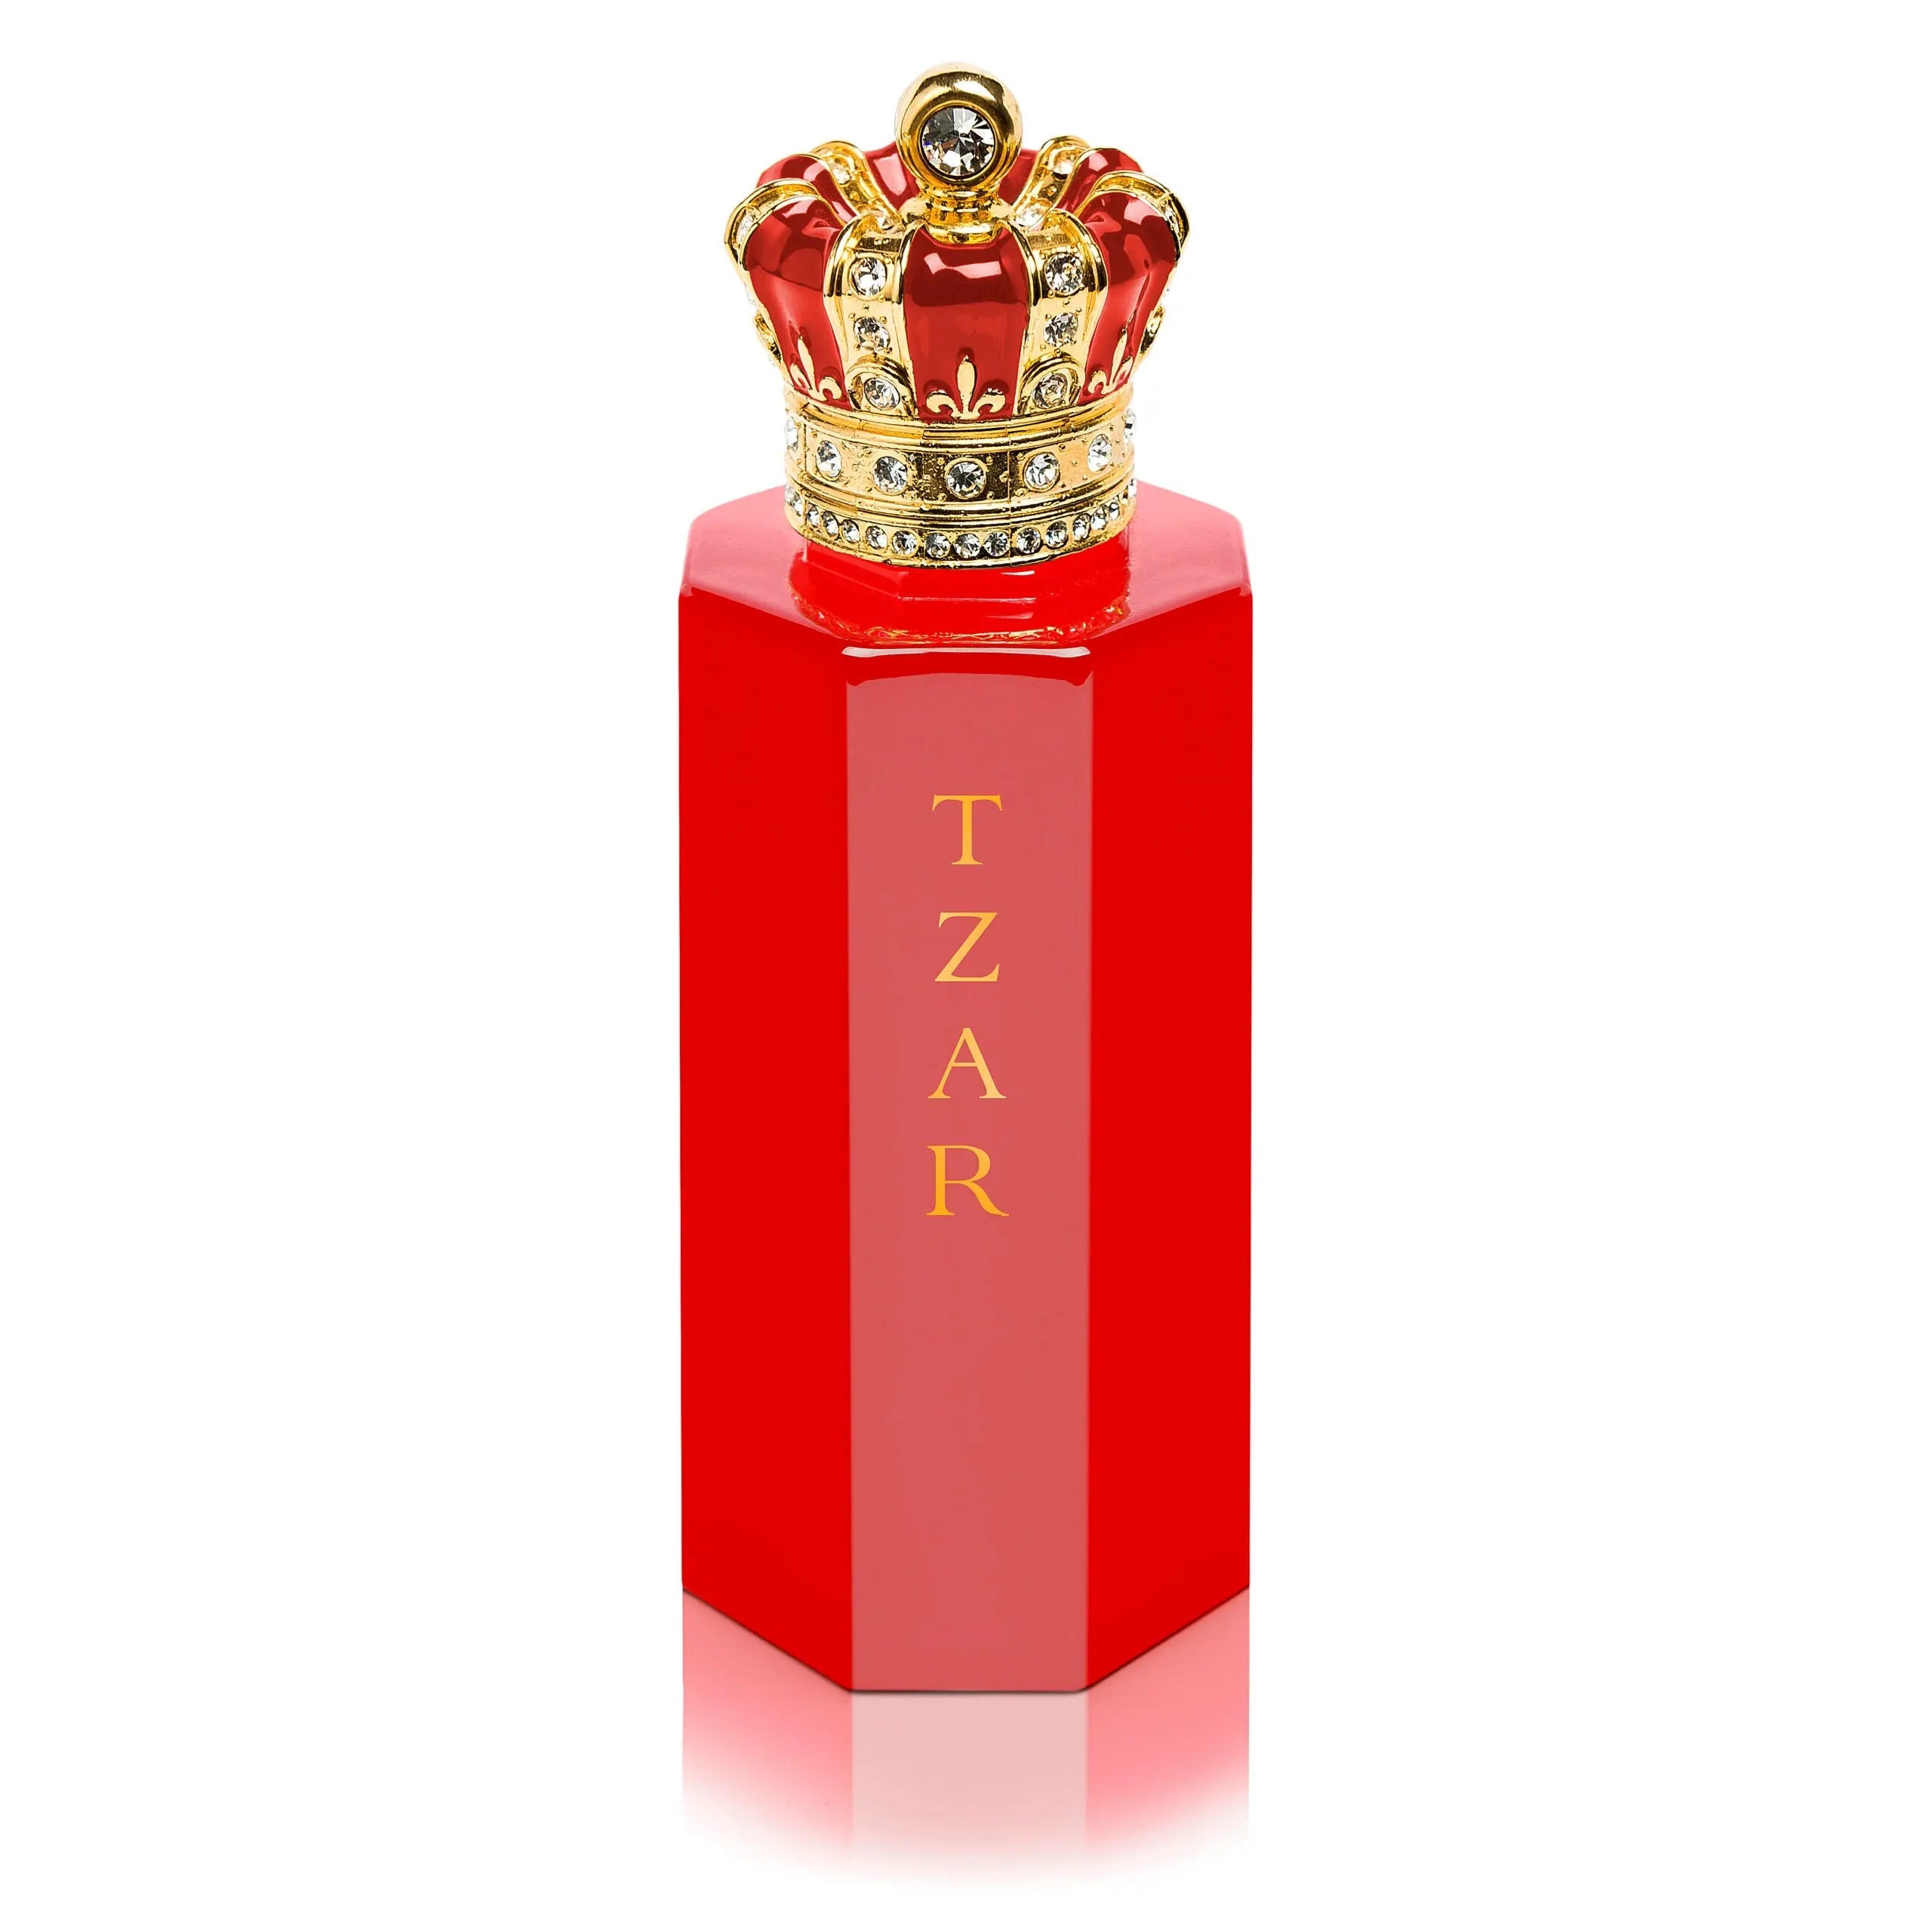 Corona Real del Zar - 50 ml